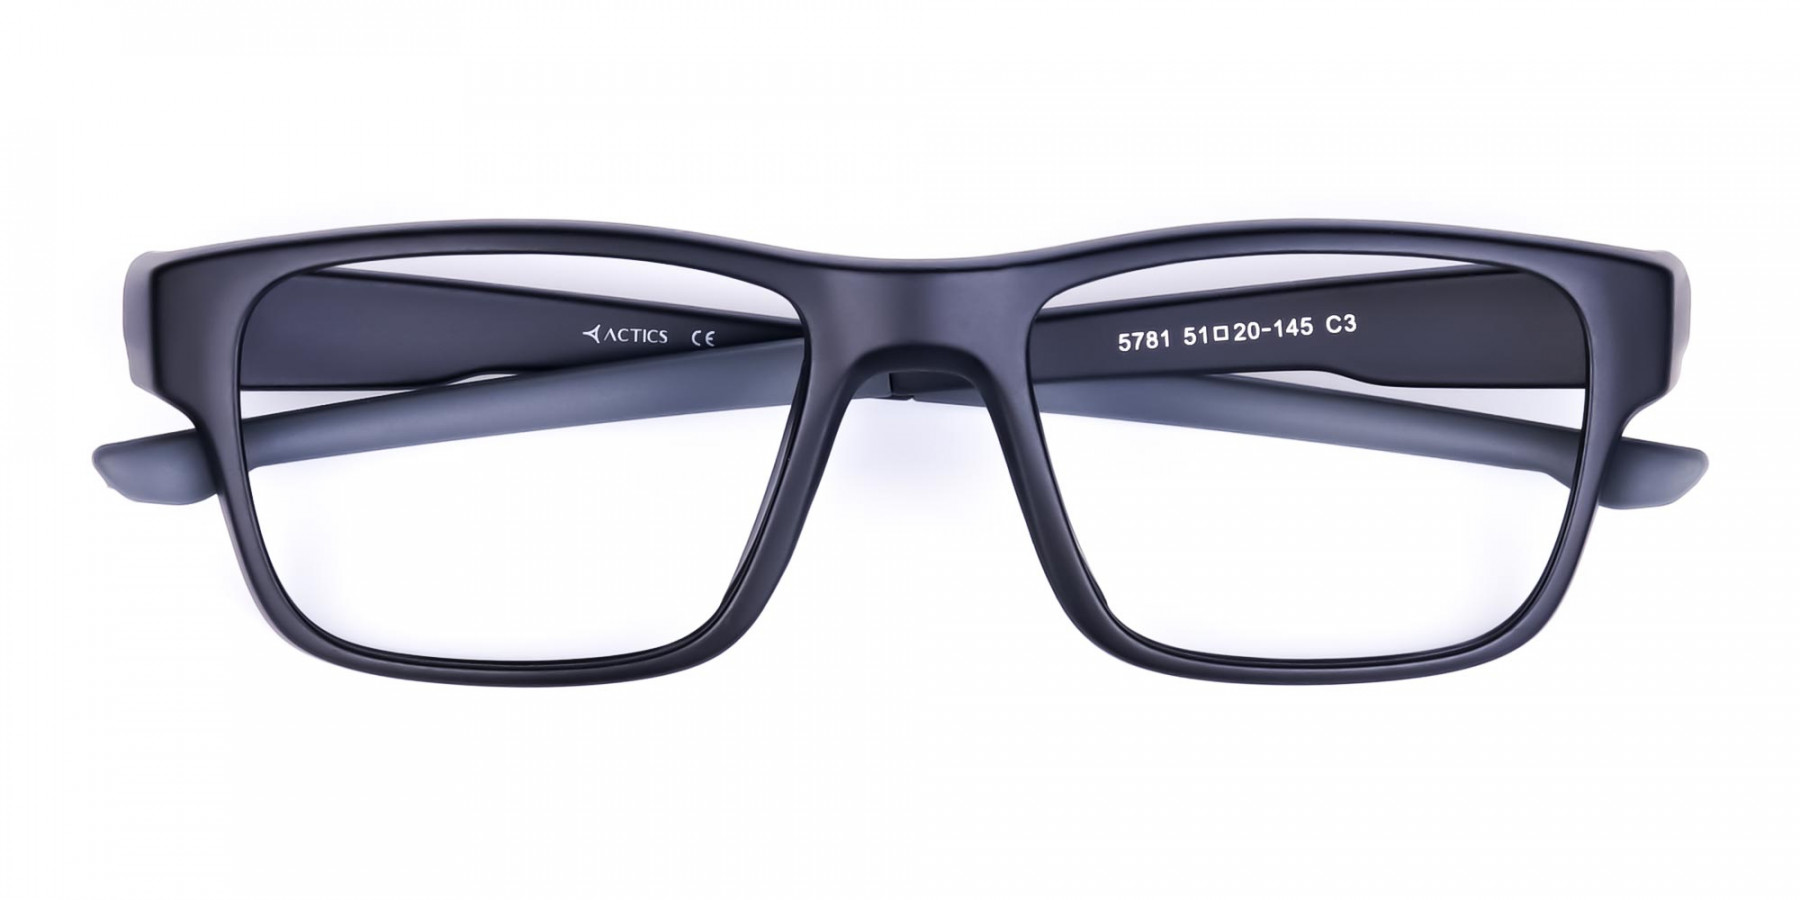 Rectangular Matte Black and Grey sports goggles-1